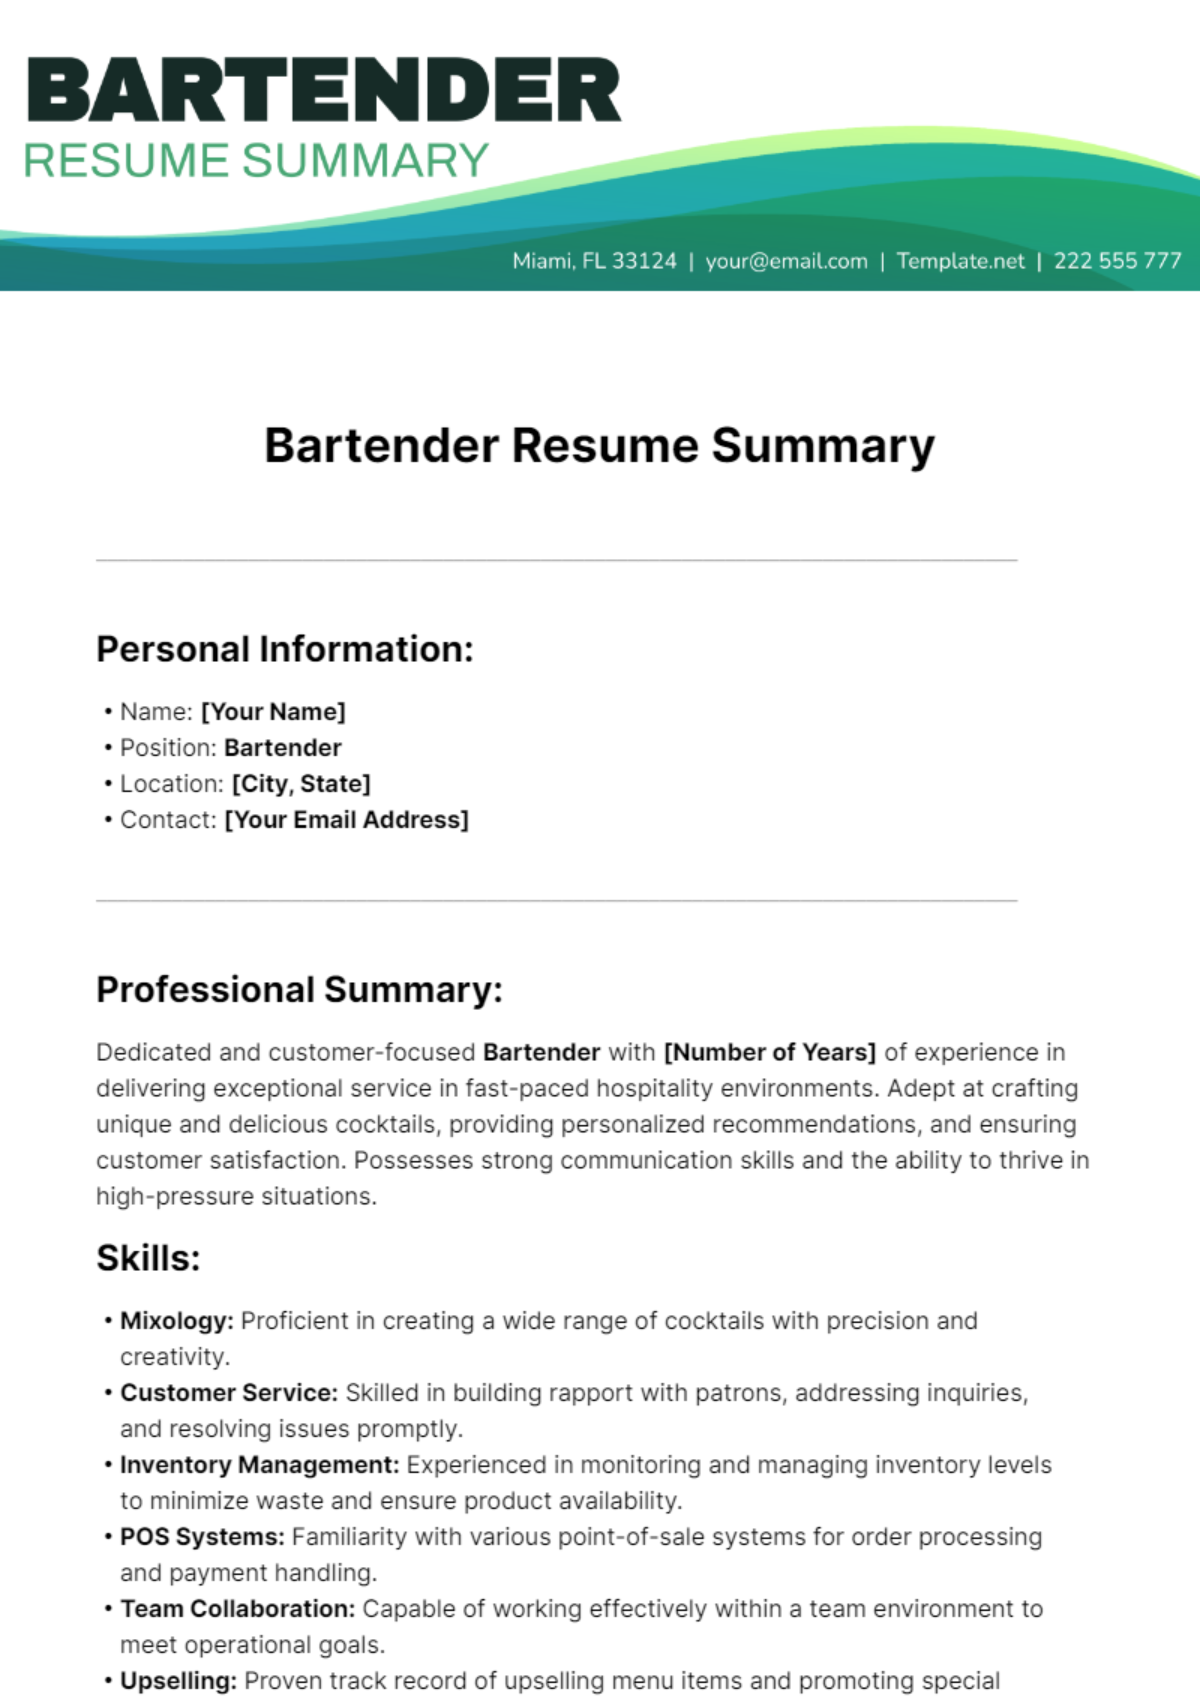 Bartender Resume Summary Template